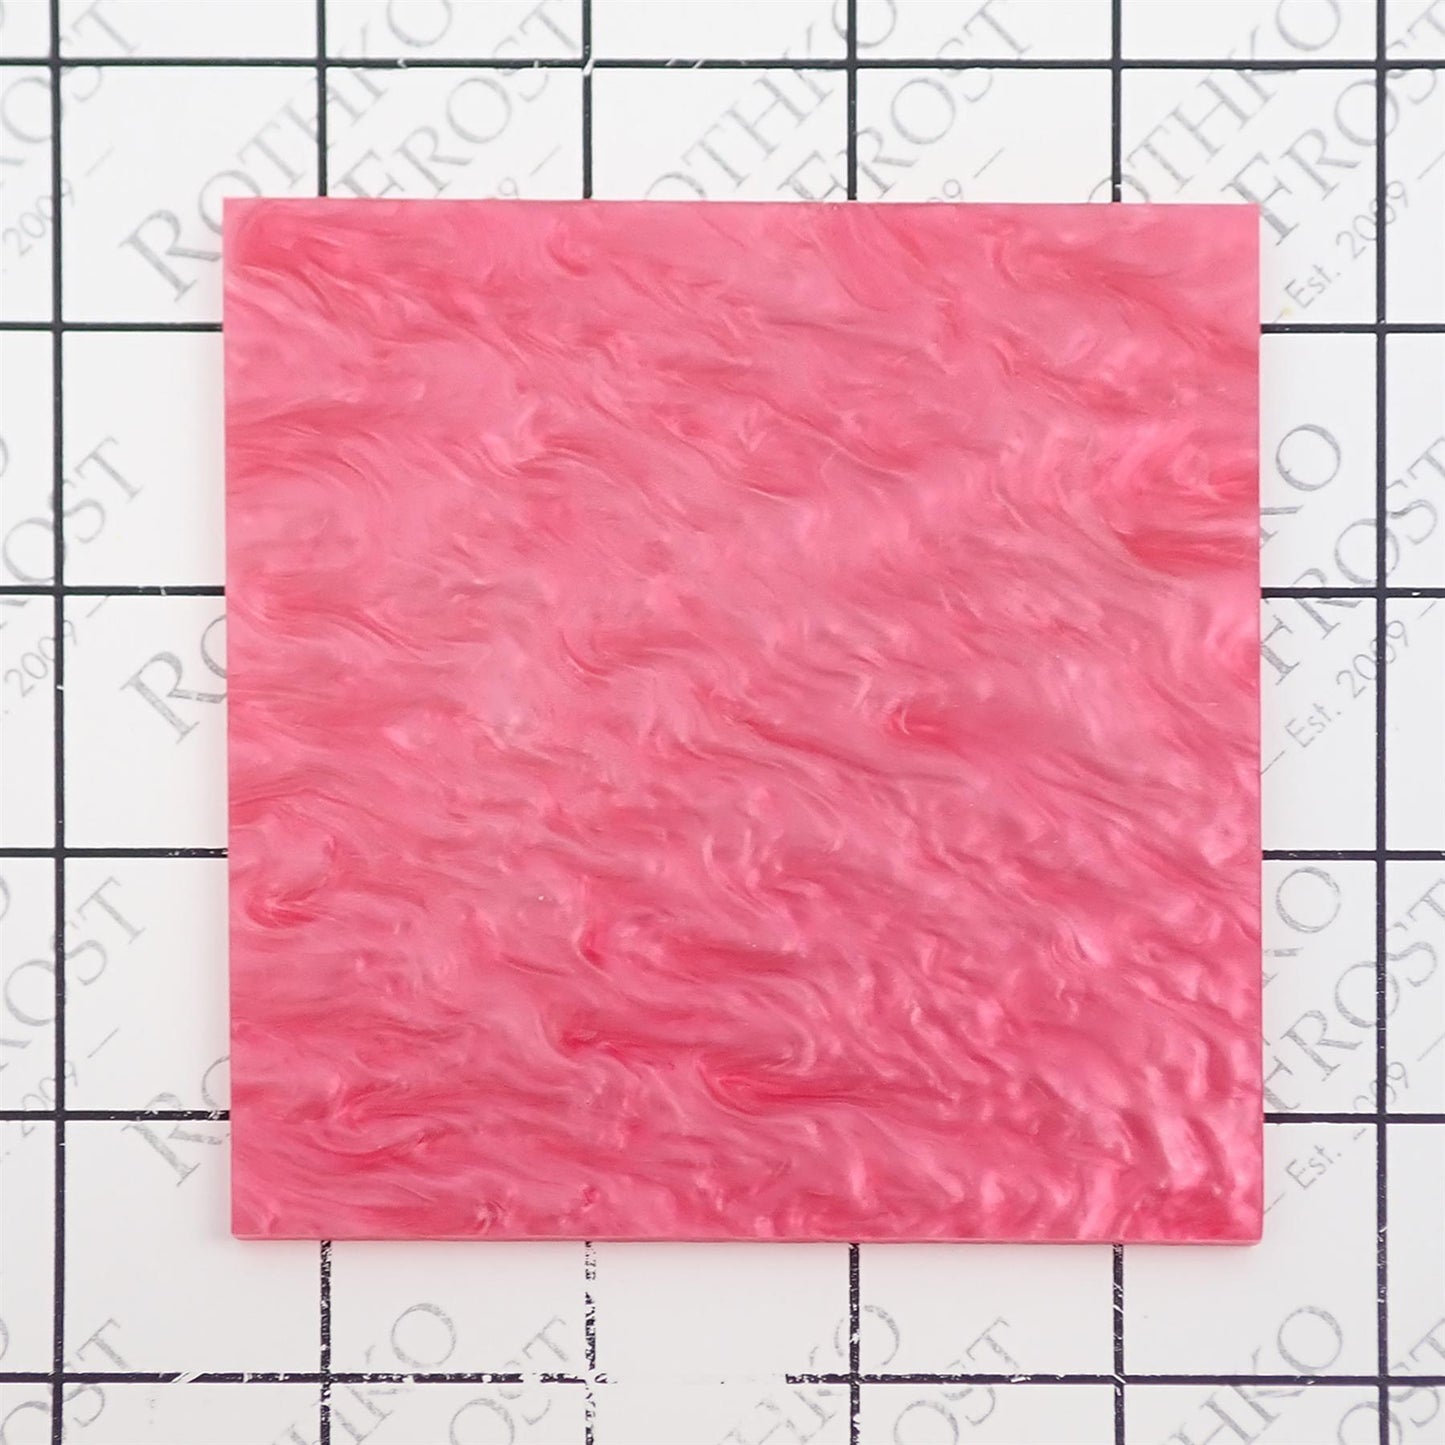 Incudo Pink Pearl Acrylic Sheet - 600x500x3mm